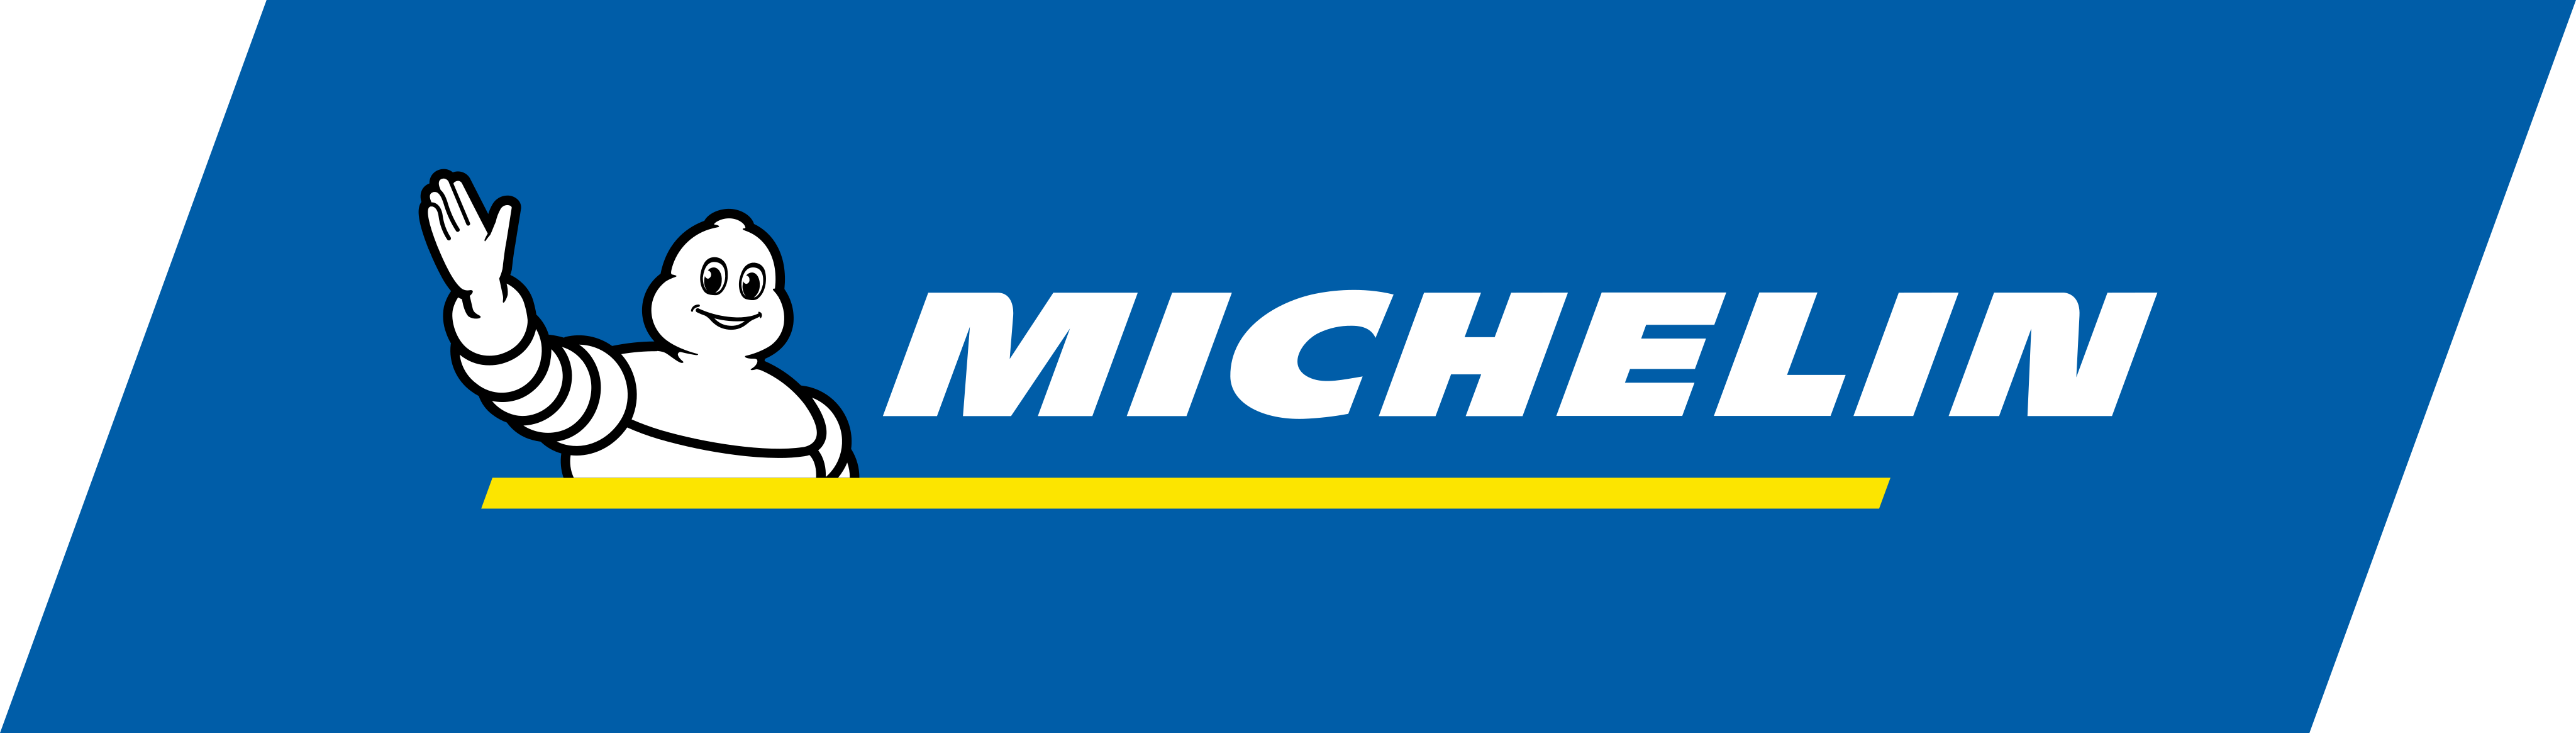 Michelin Logo PNG - 179520